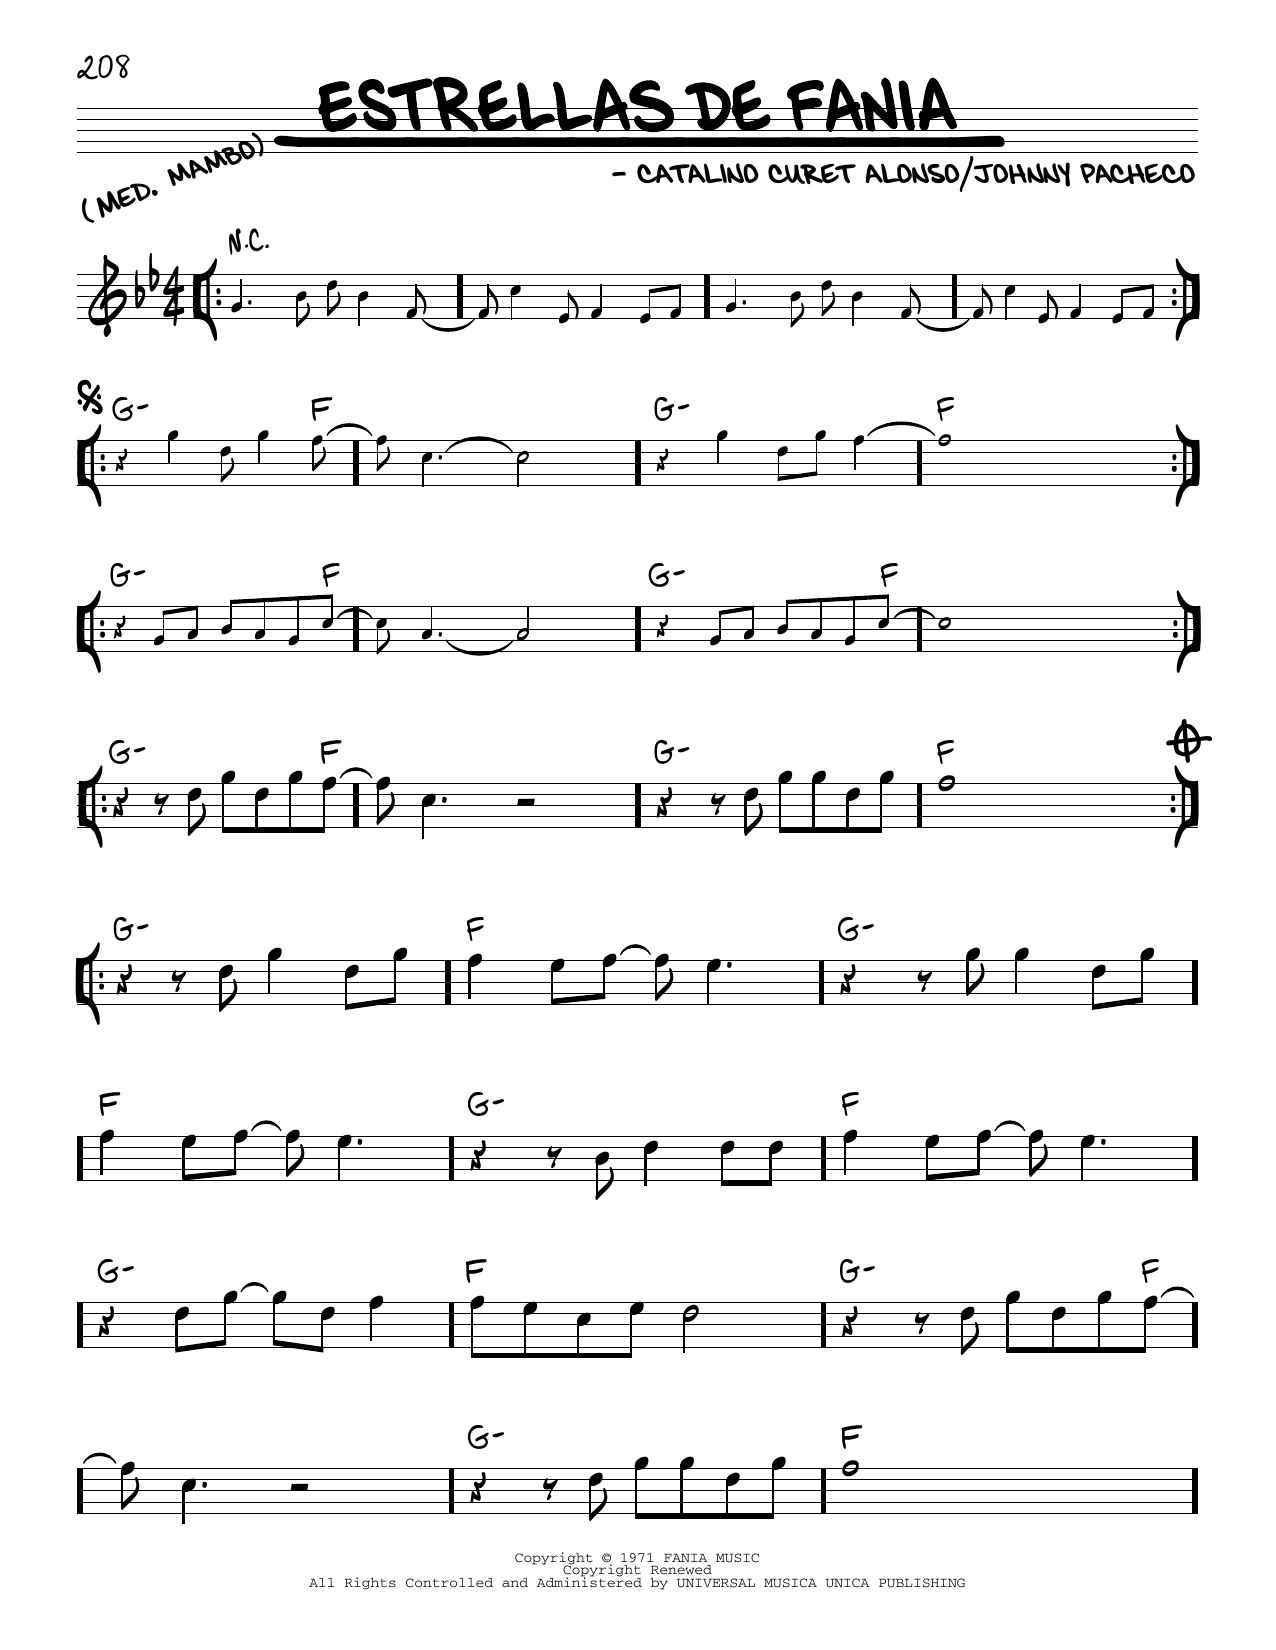 Download Catalino Curet Alonso Estrellas De Fania sheet music and printable PDF score & Latin music notes